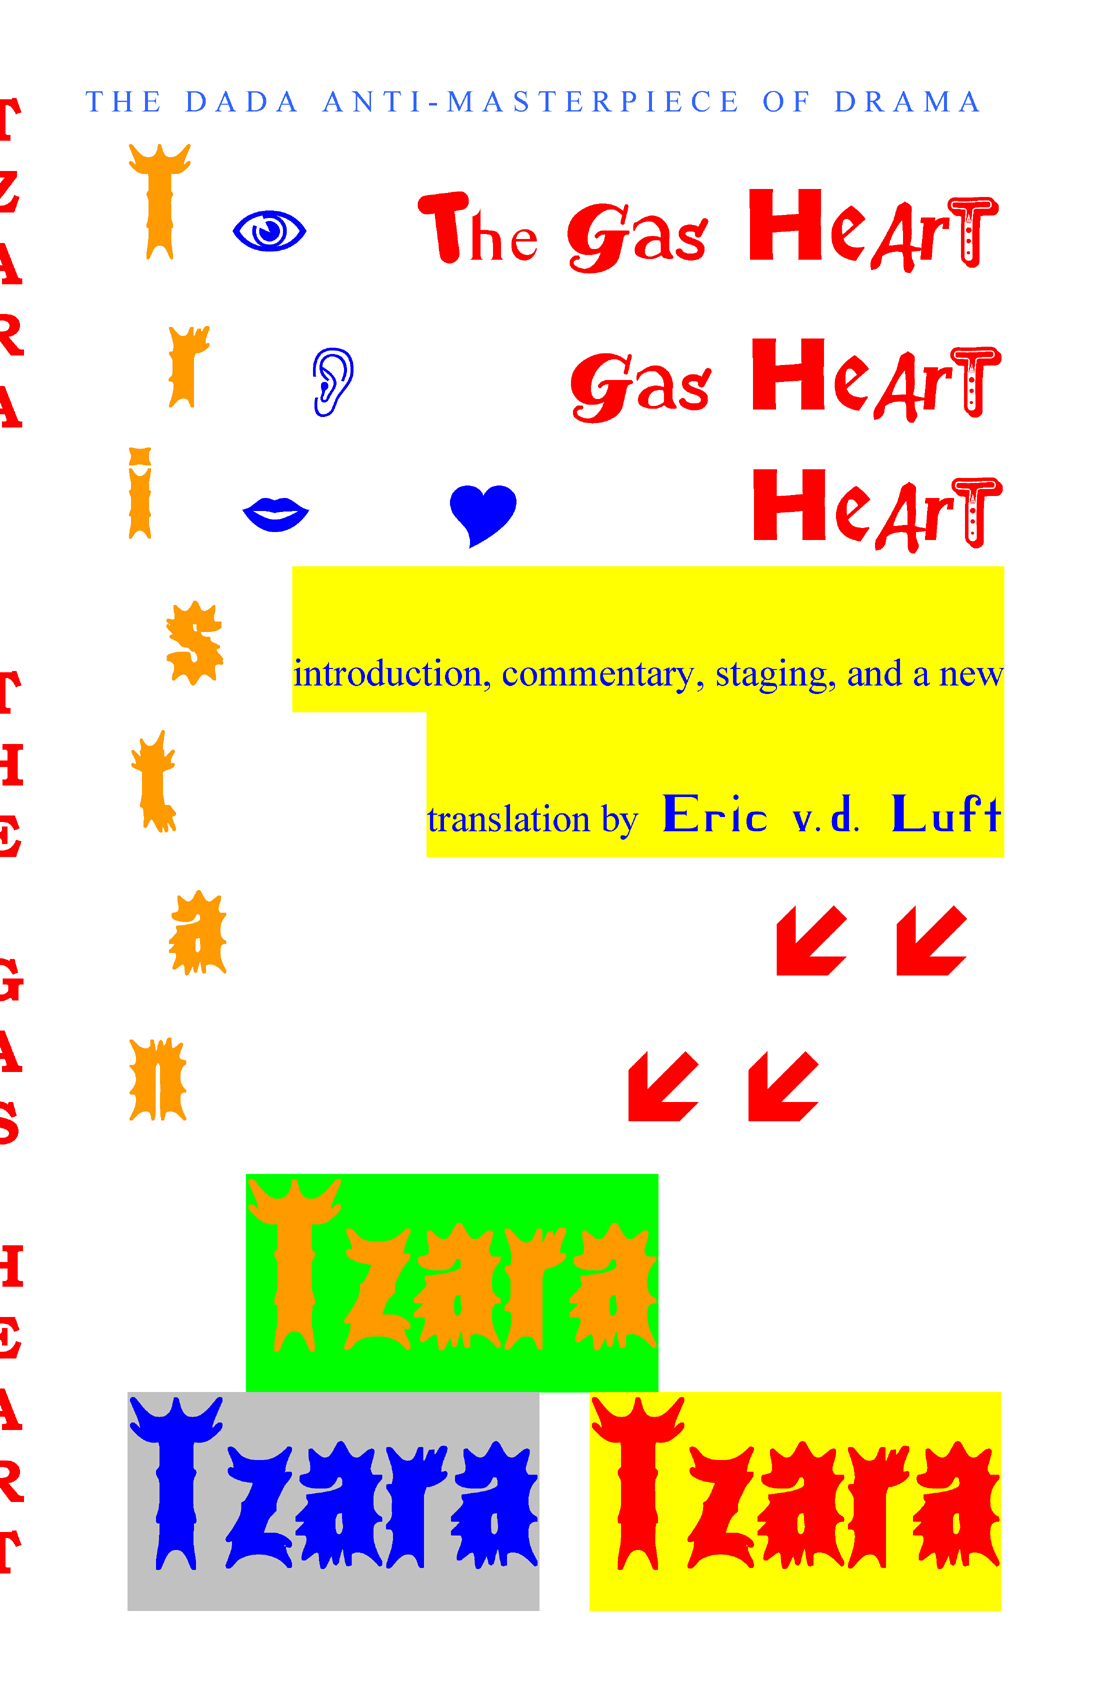 The Gas Heart by Tristan Tzara